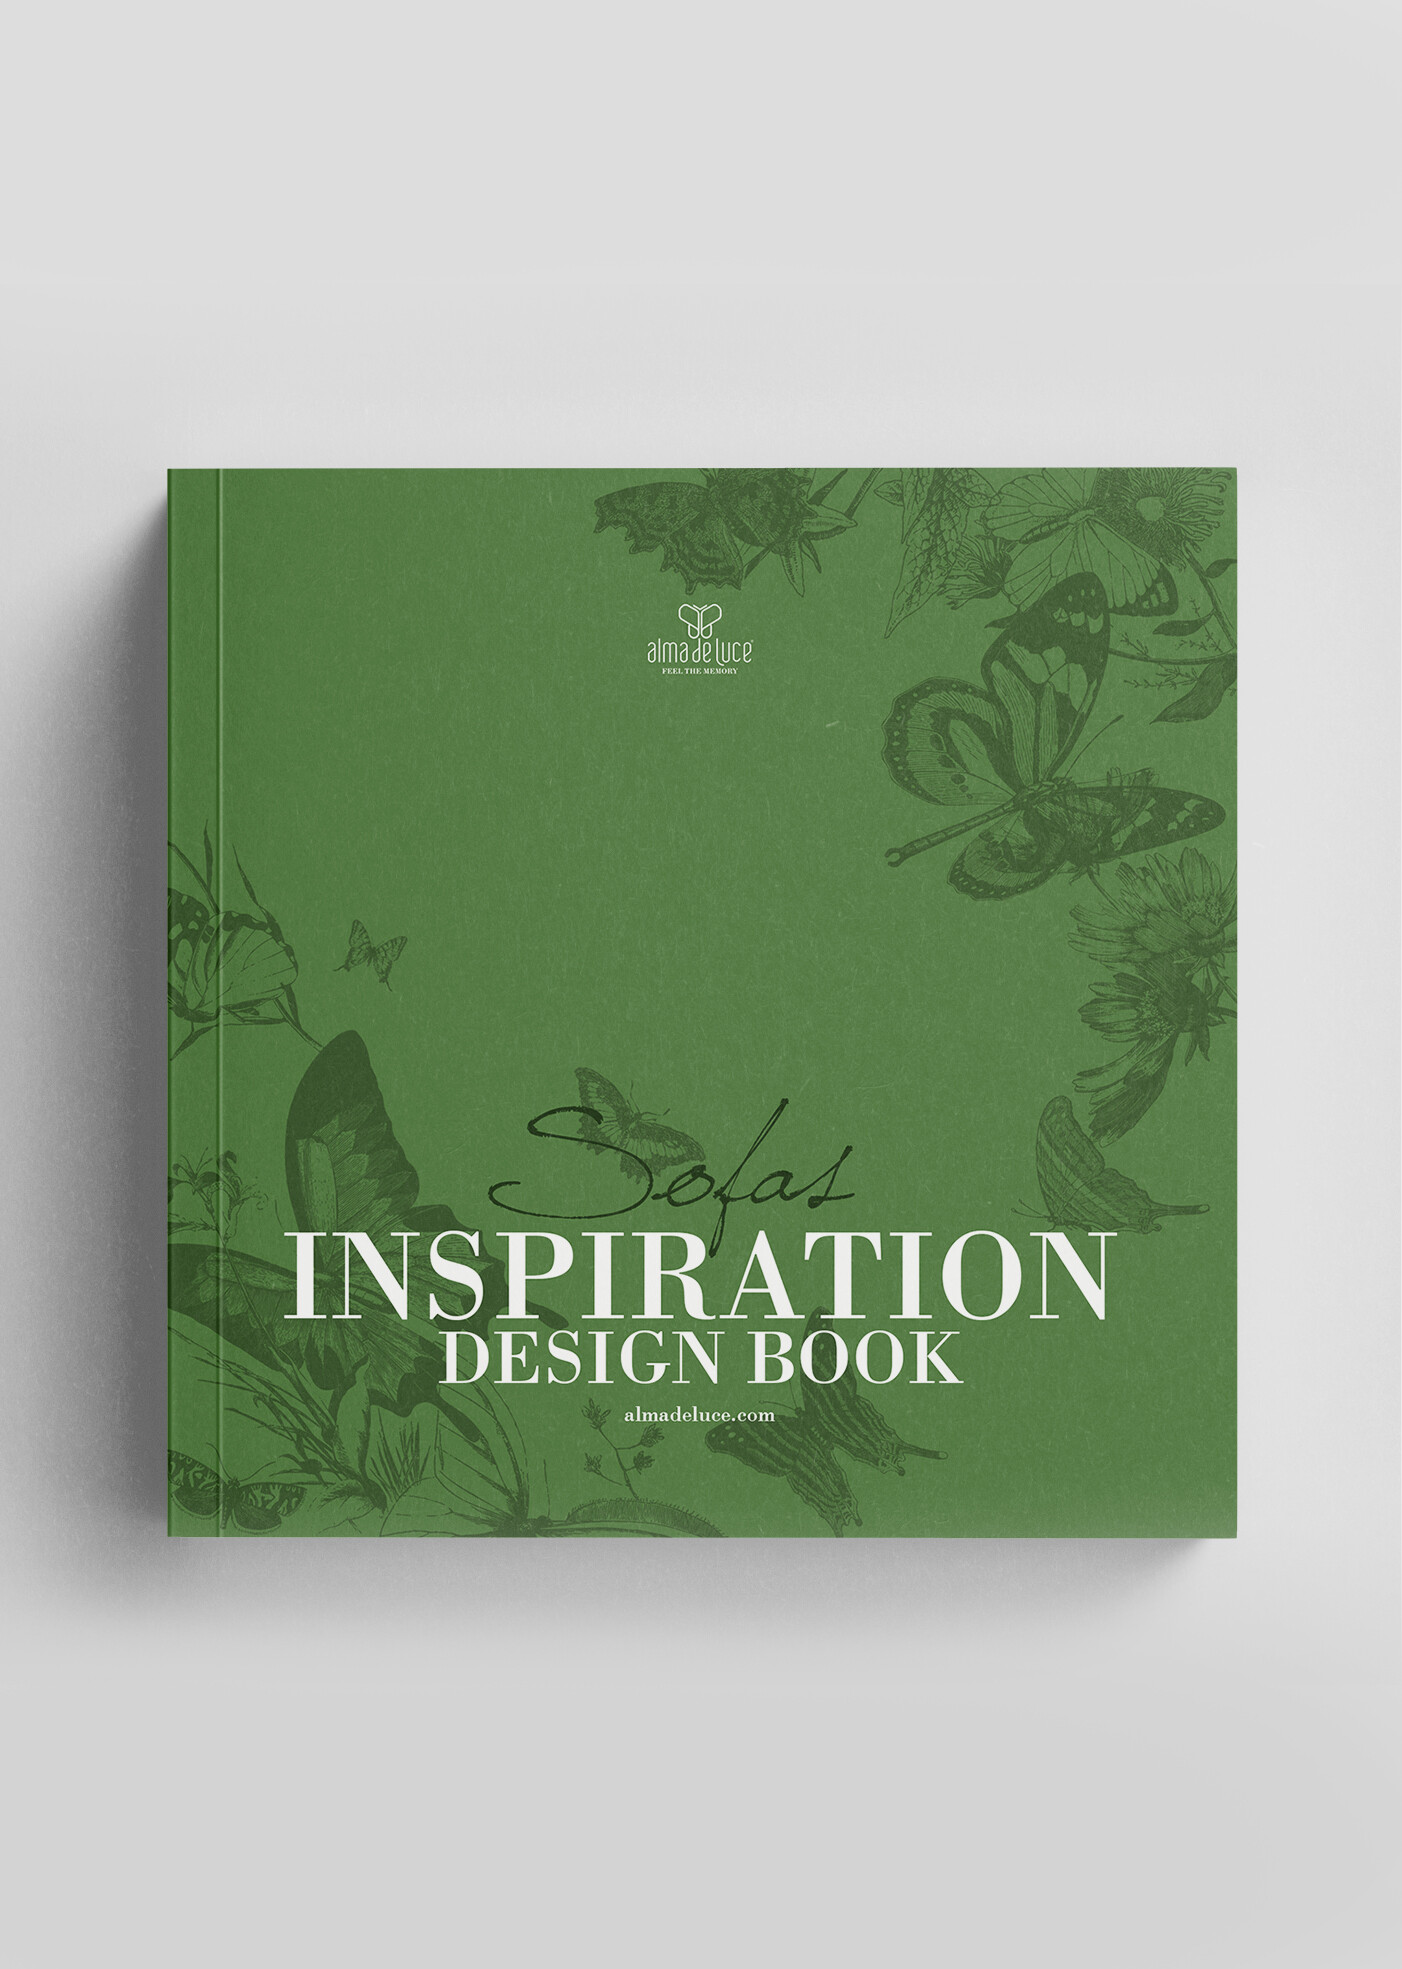 ALMAdeLUCE_Sofas_INSPIRATION DESIGN BOOK_site 520x730